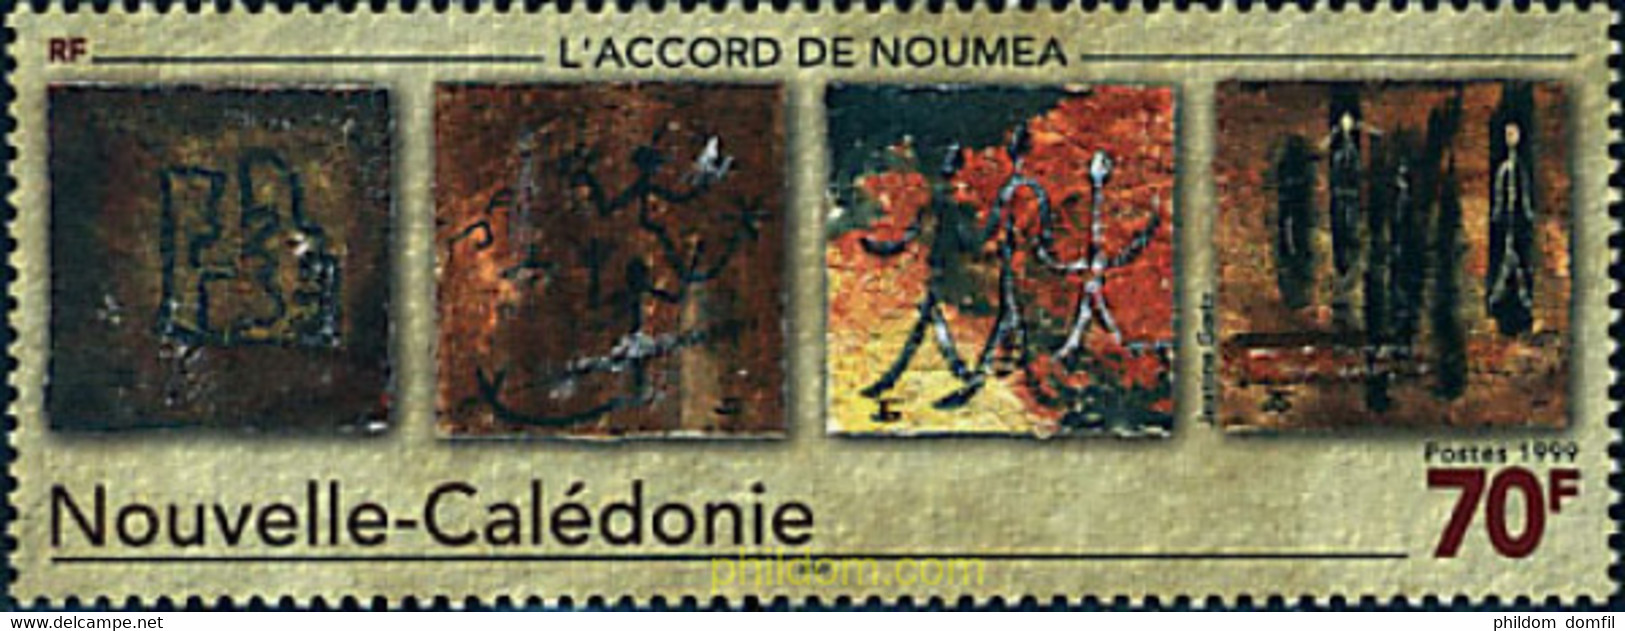 67933 MNH NUEVA CALEDONIA 1999 ACUERDO DE NOUMEA - Used Stamps